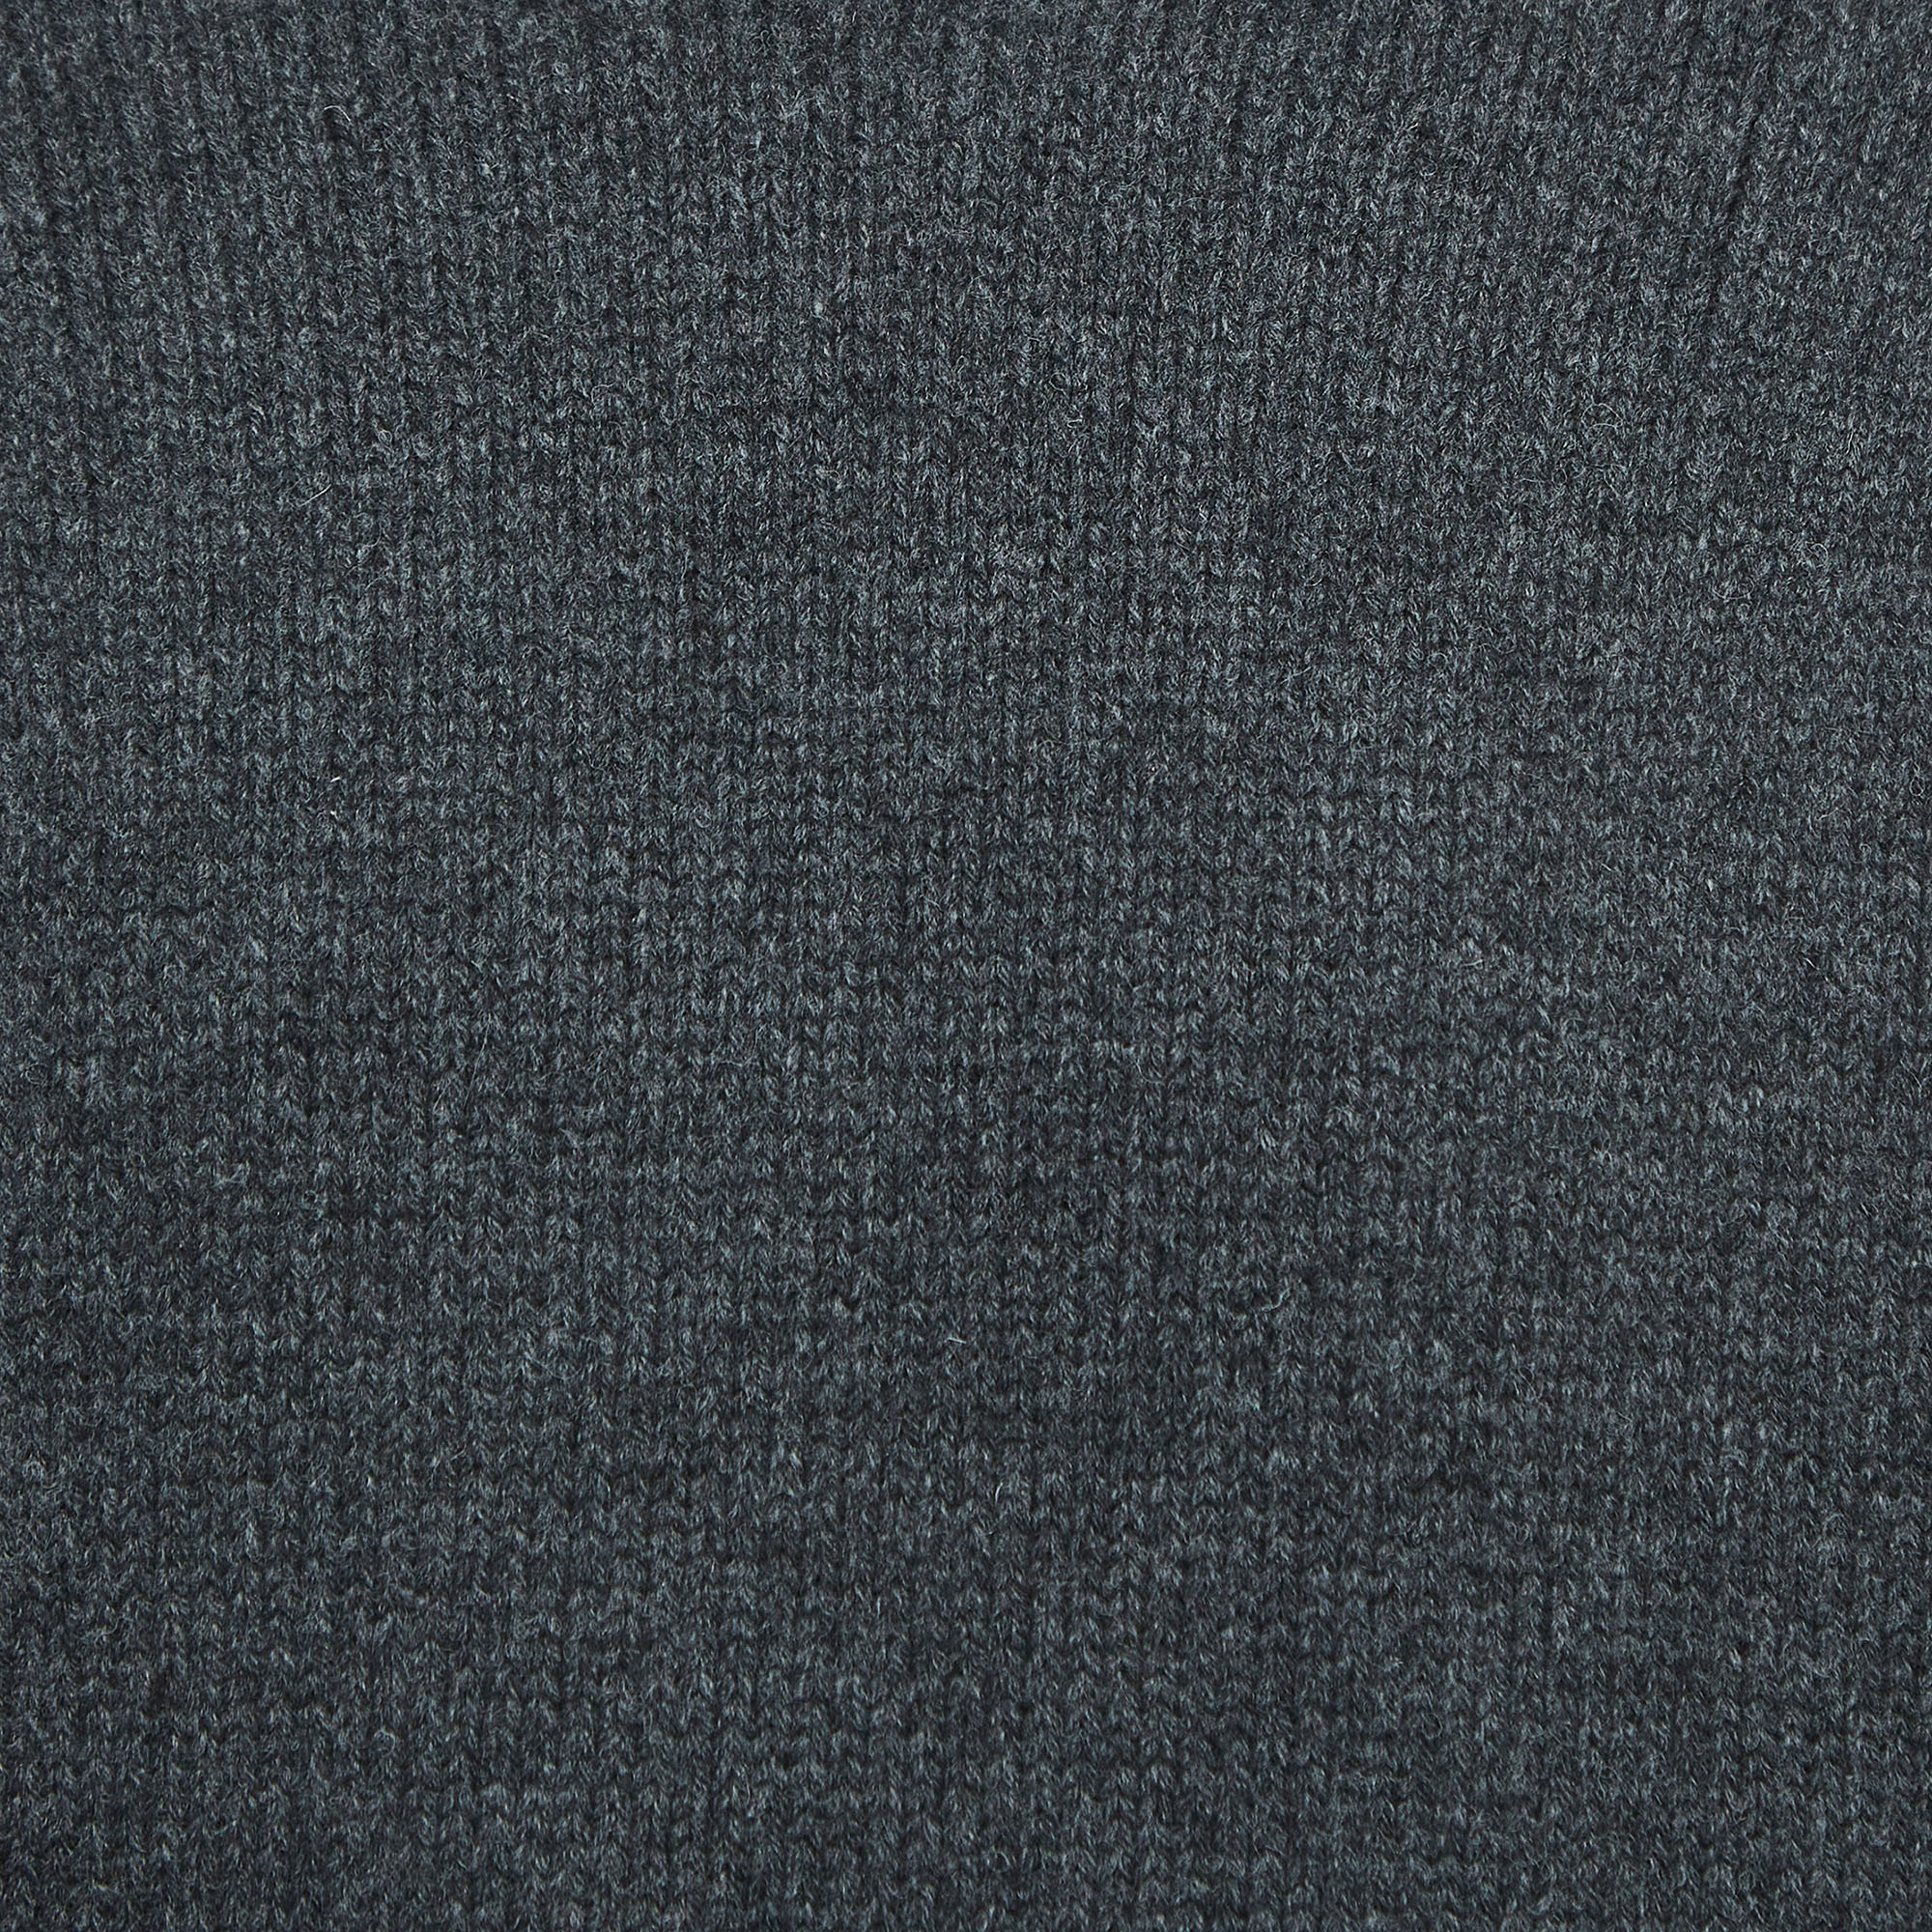 Prada Charcoal Grey Wool Turtleneck Sweater M